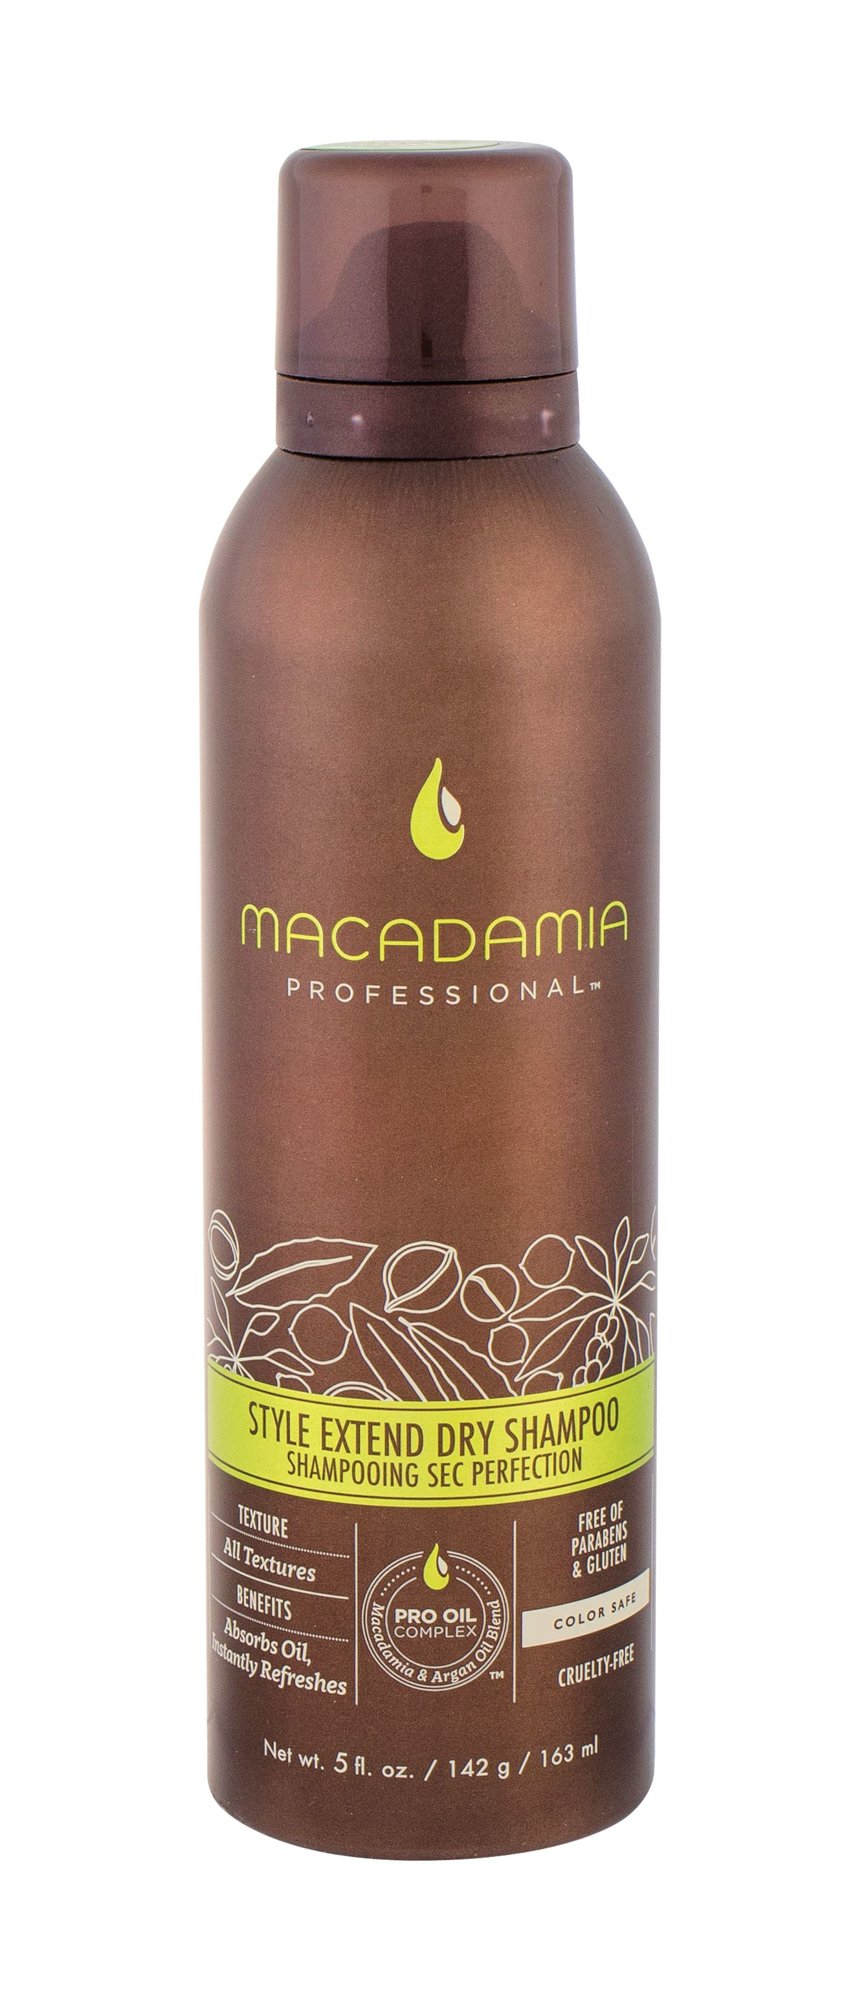 Macadamia Professional Style Extend